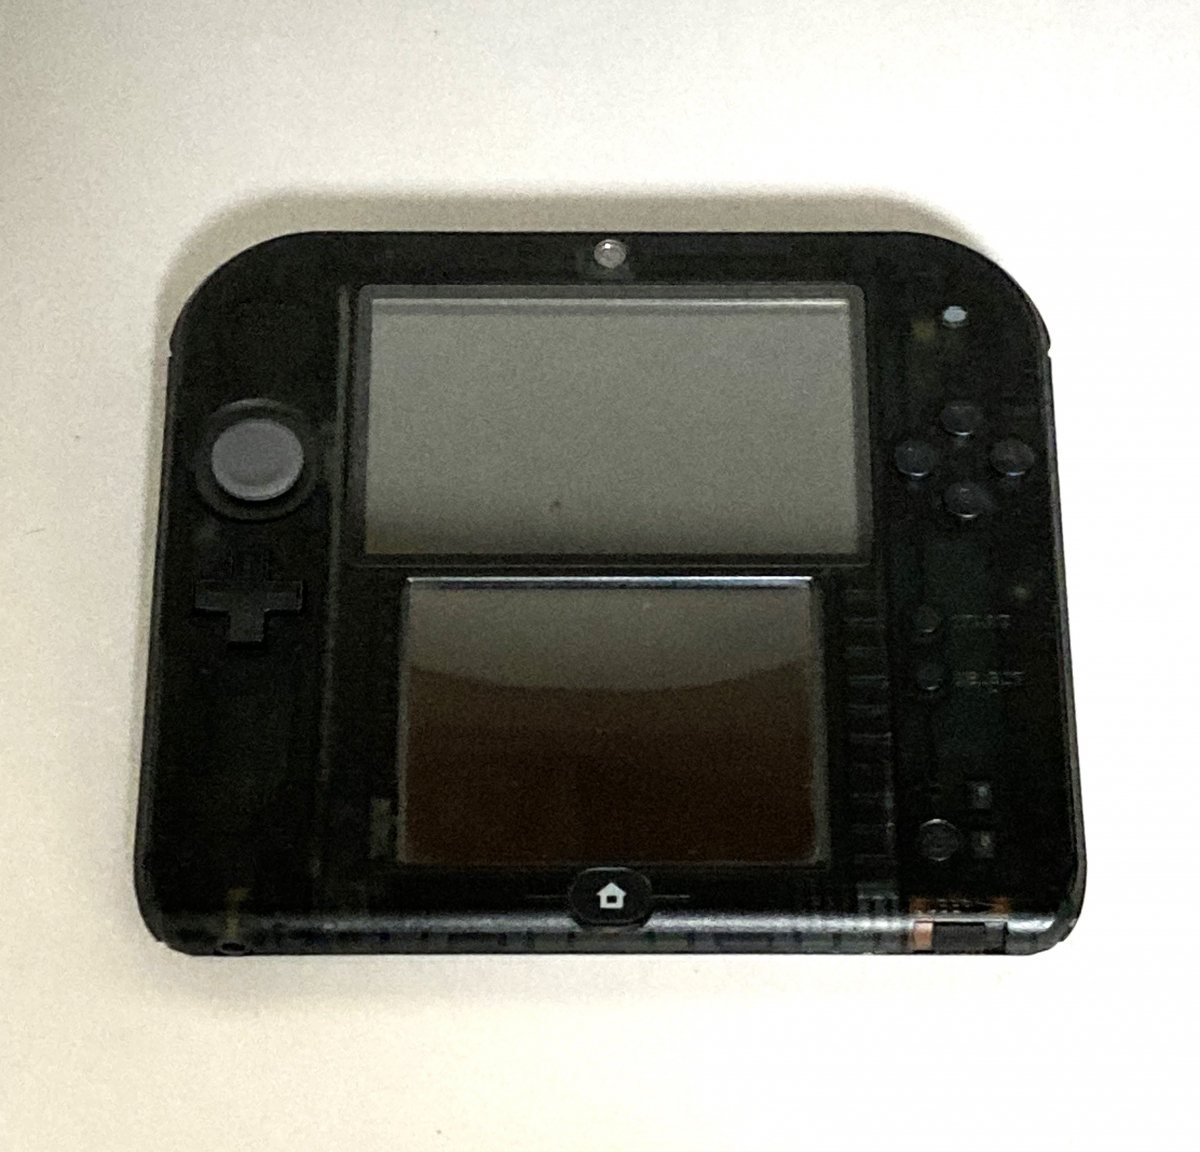 Nintendo 2DS nintendo clear black body 